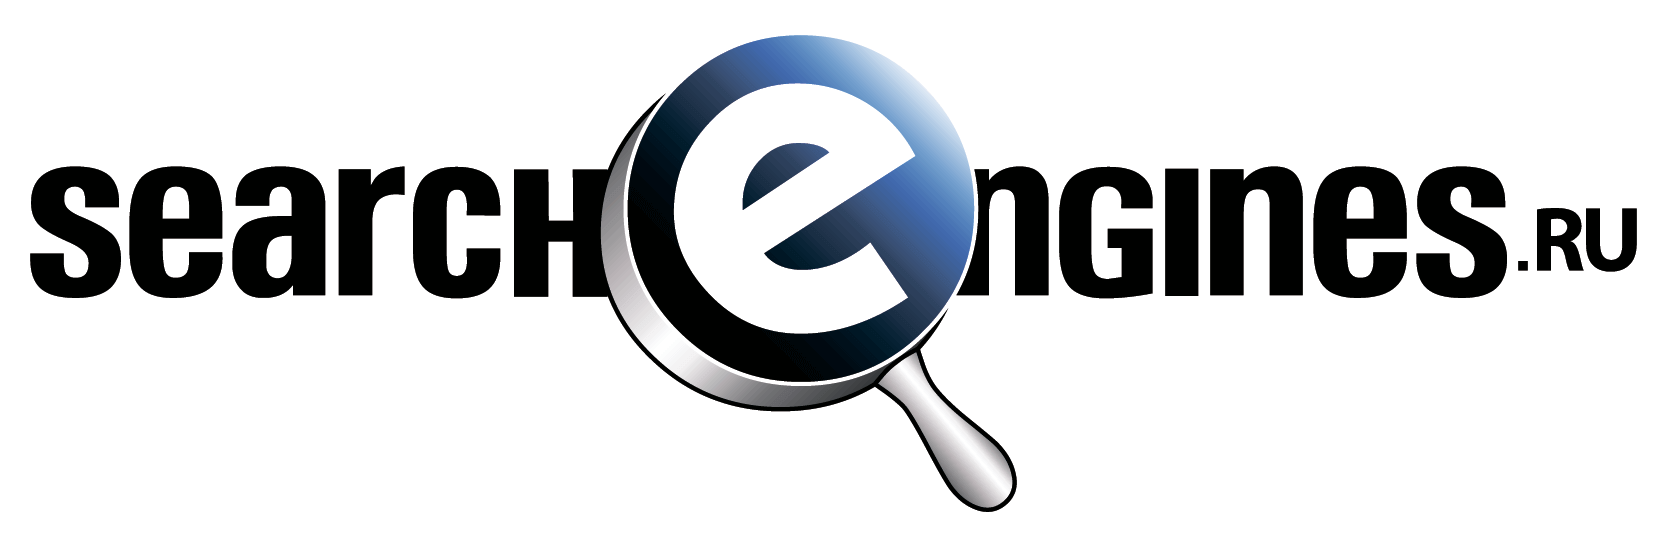 Searchengines logo